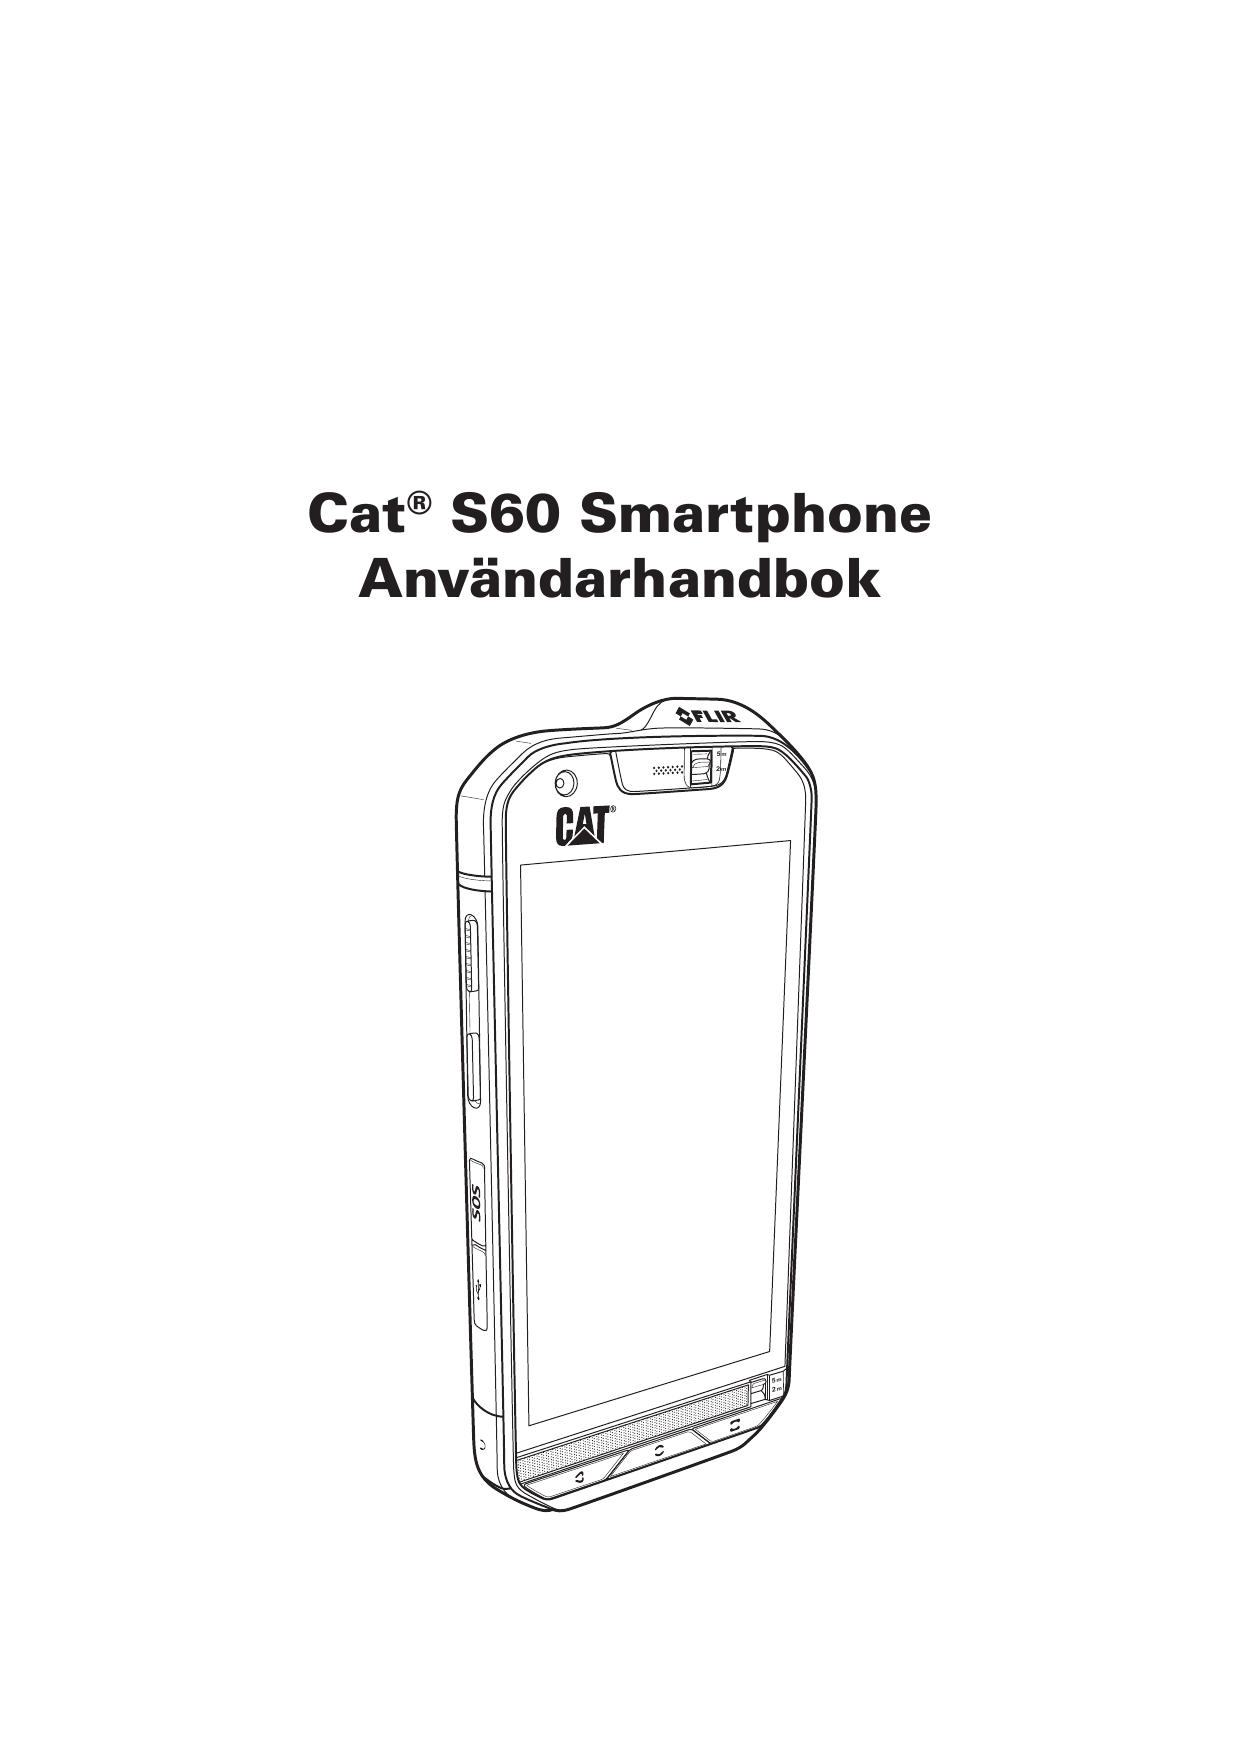 Cat® S60 SmartphoneAnvändarhandbok5m2m5m2m